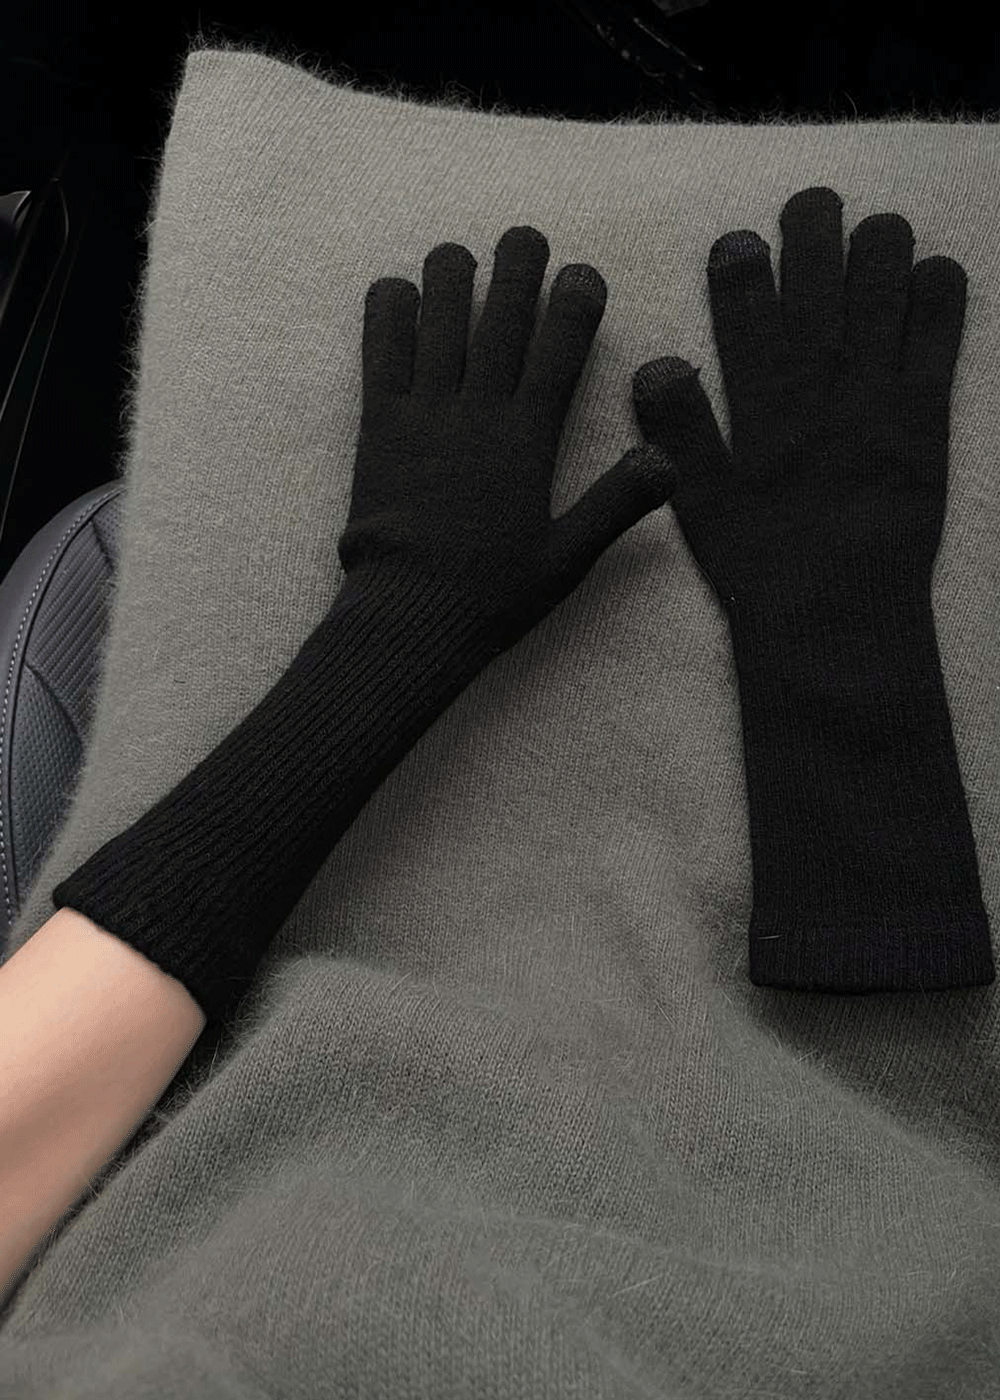 Long tight gloves